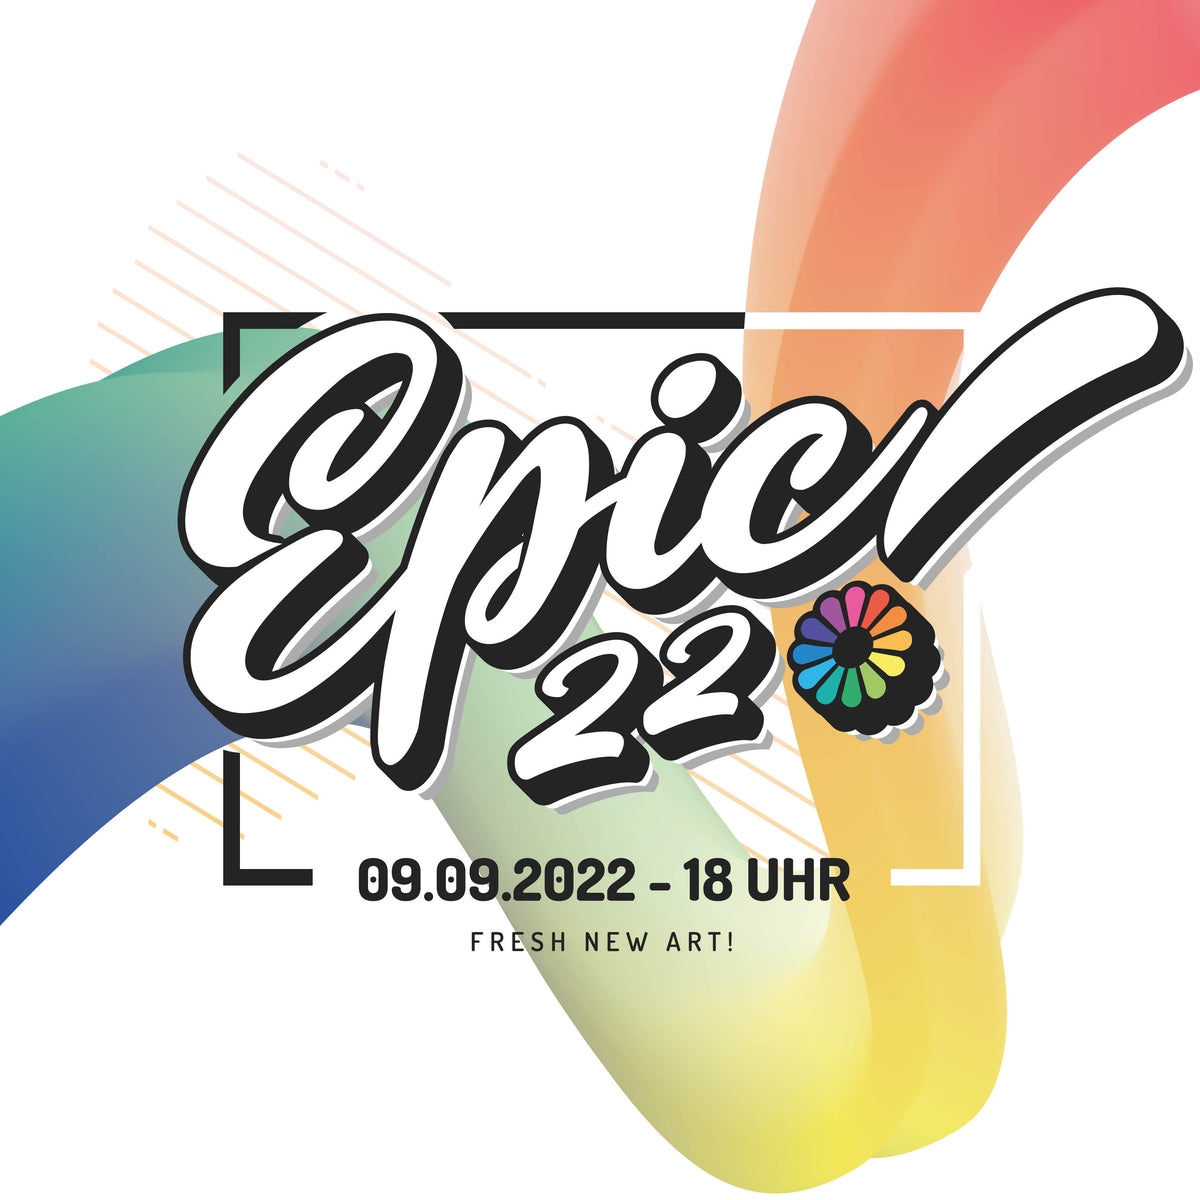 EPIC22!